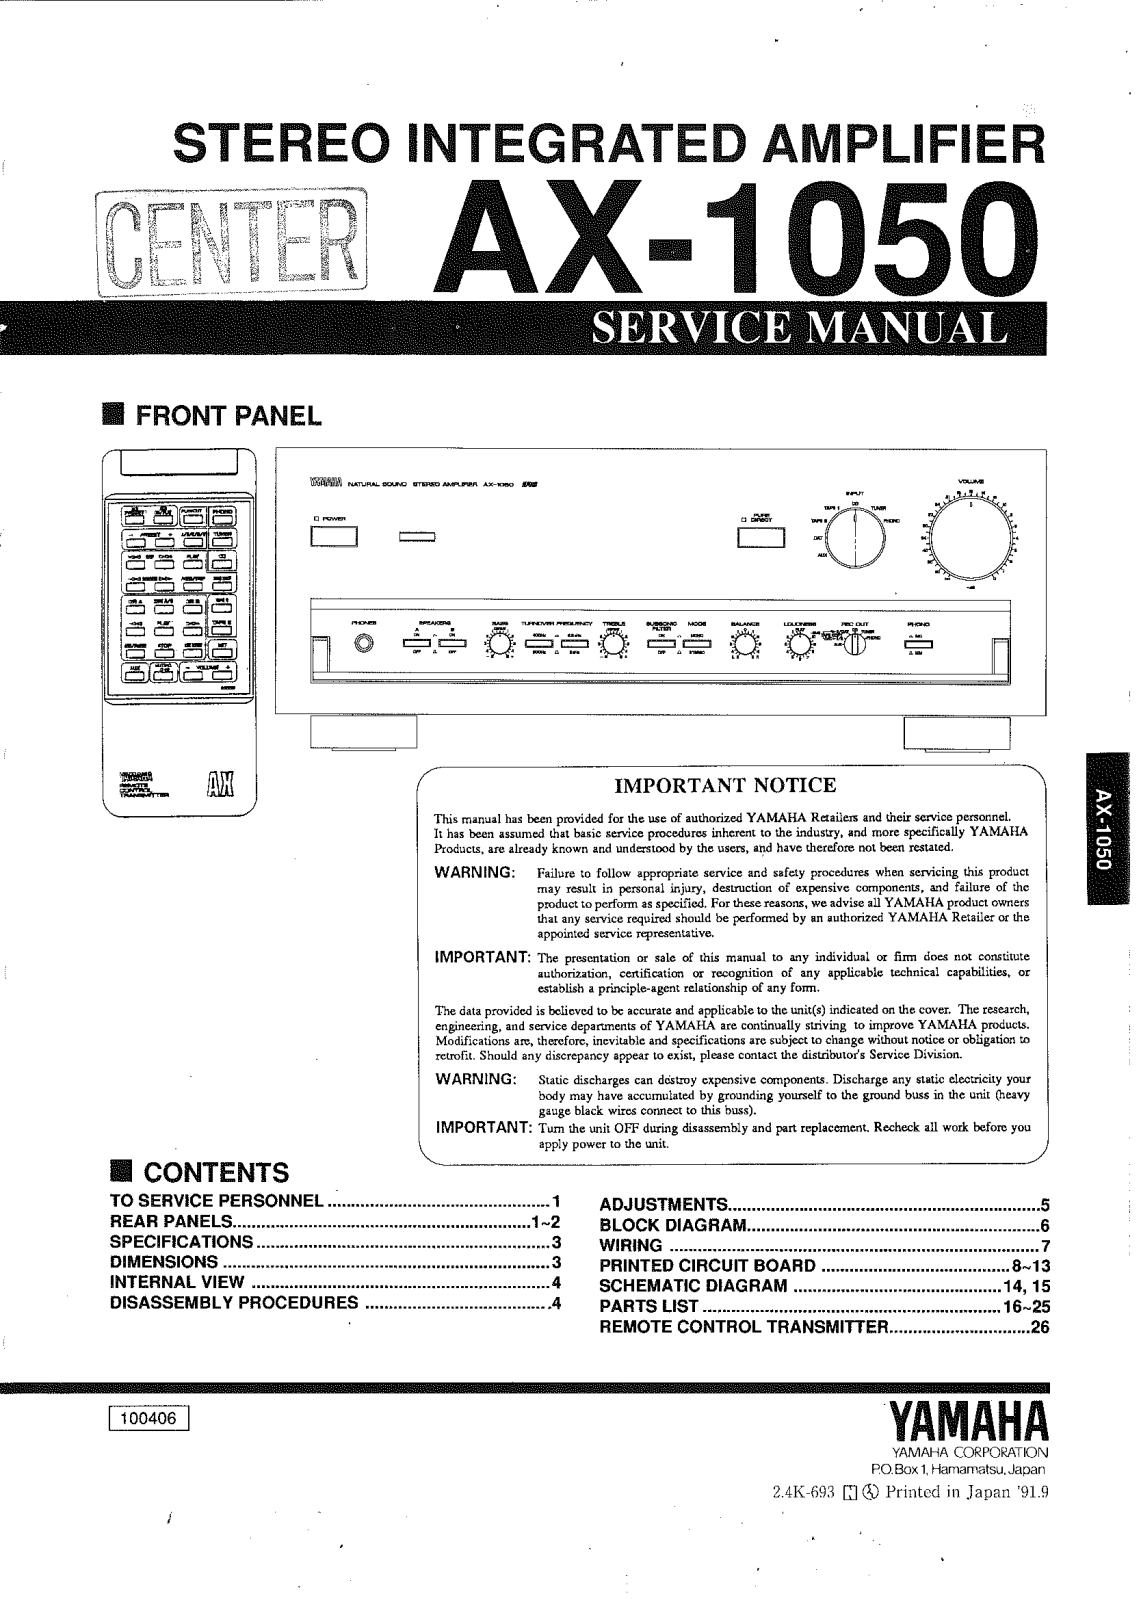 Yamaha AX-1050 Service manual